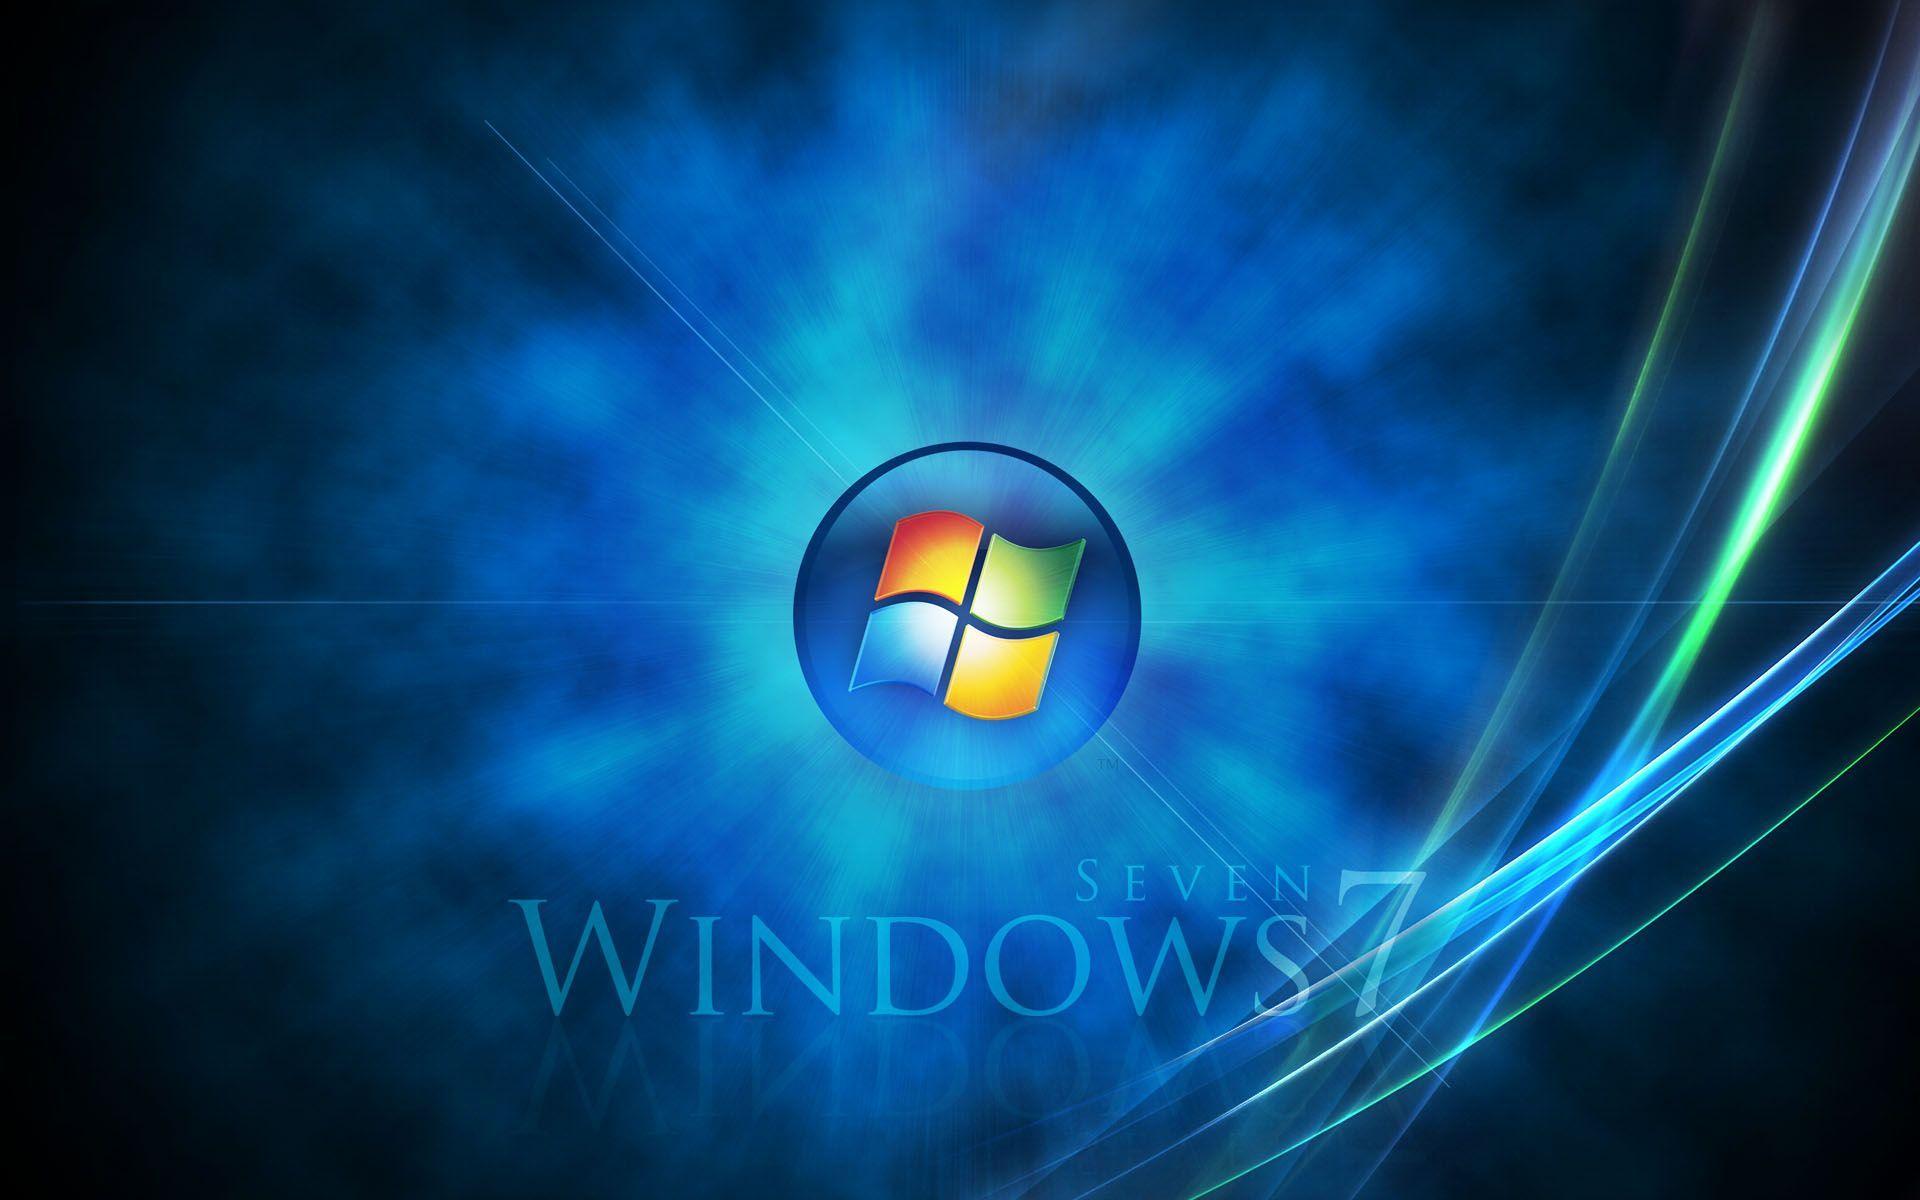 msn screensavers for windows 7